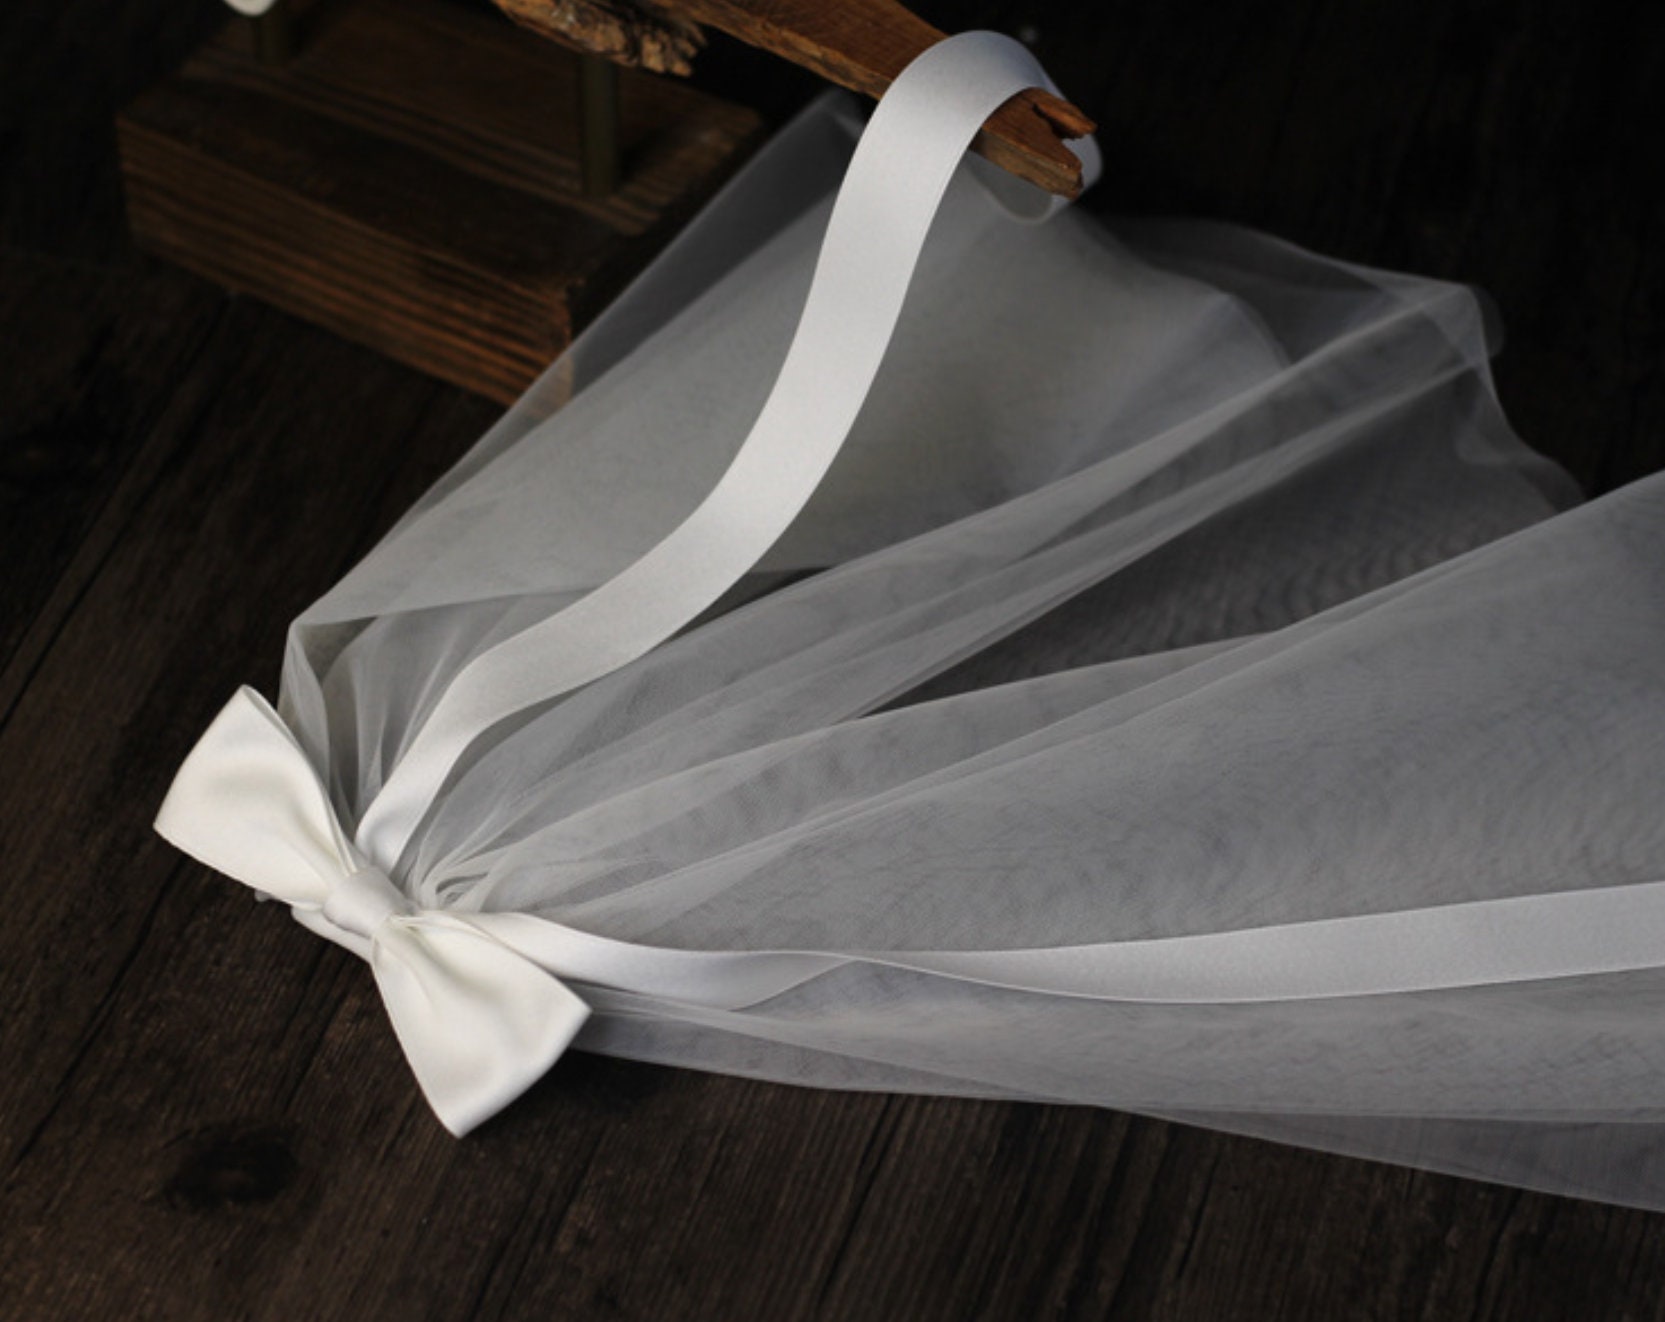 Korea Short Wedding Veil With Bow Tie Detail. 